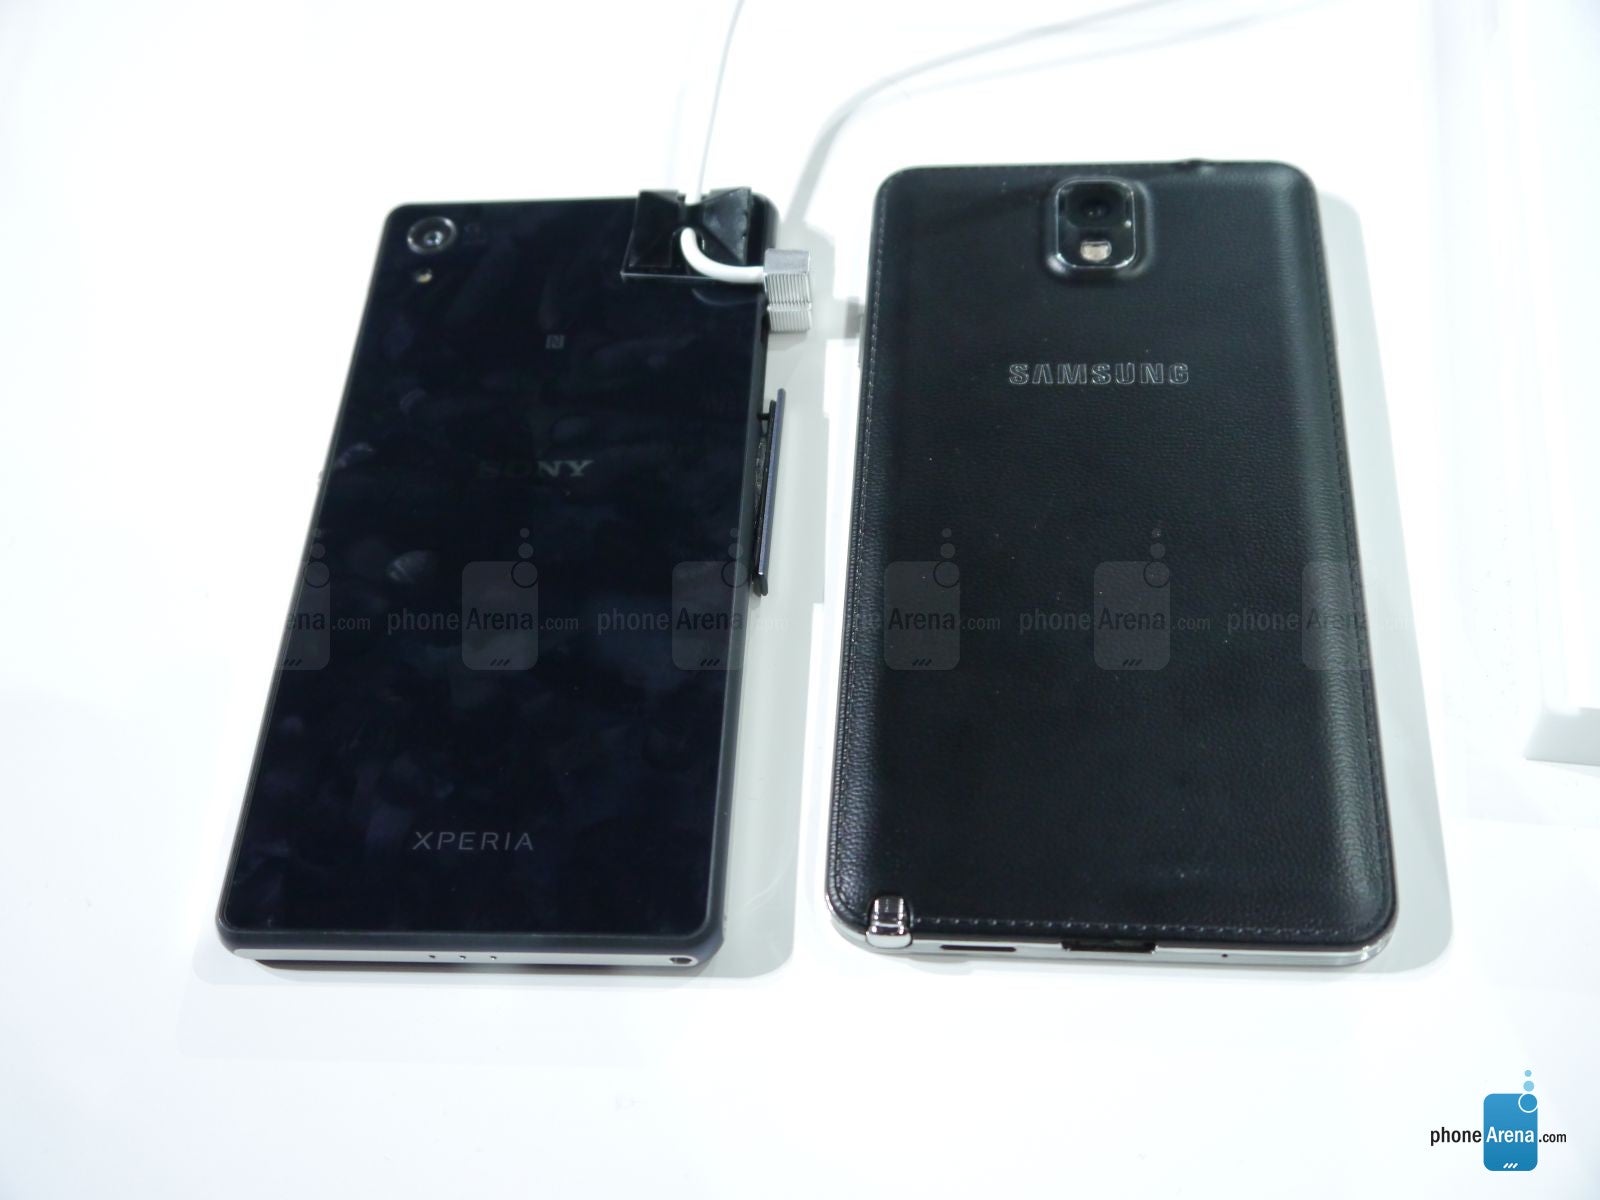 Sony Xperia Z2 vs Samsung Galaxy Note 3: first look